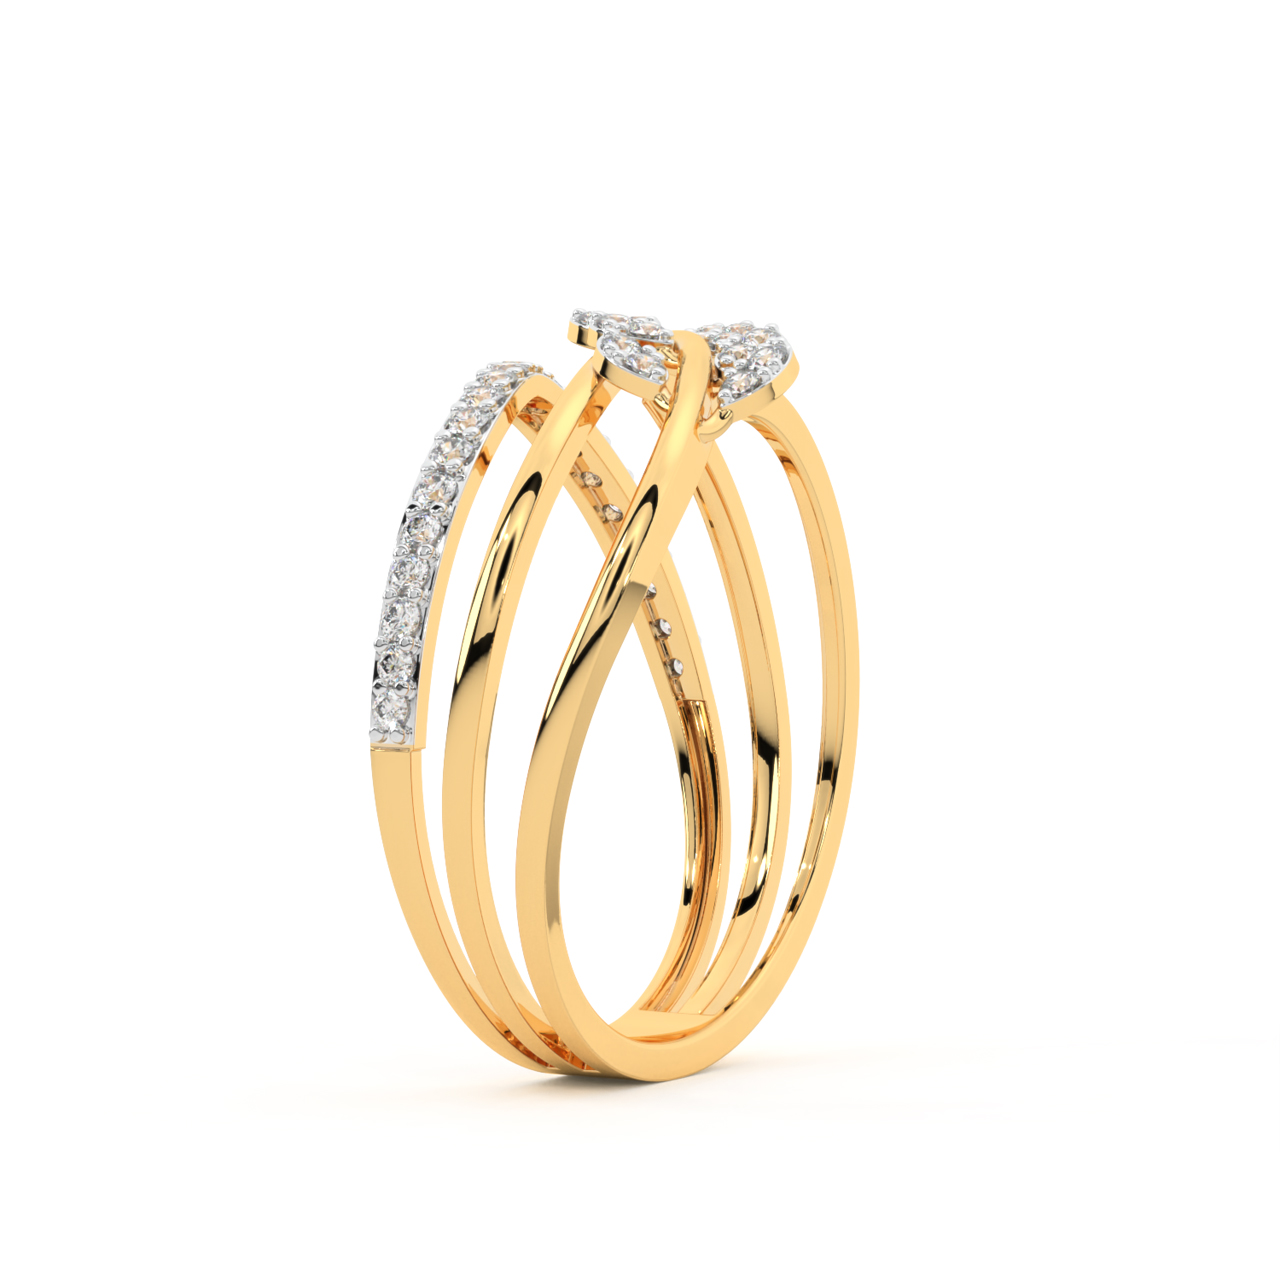 Dazzling Leave Diamond Engagement Ring